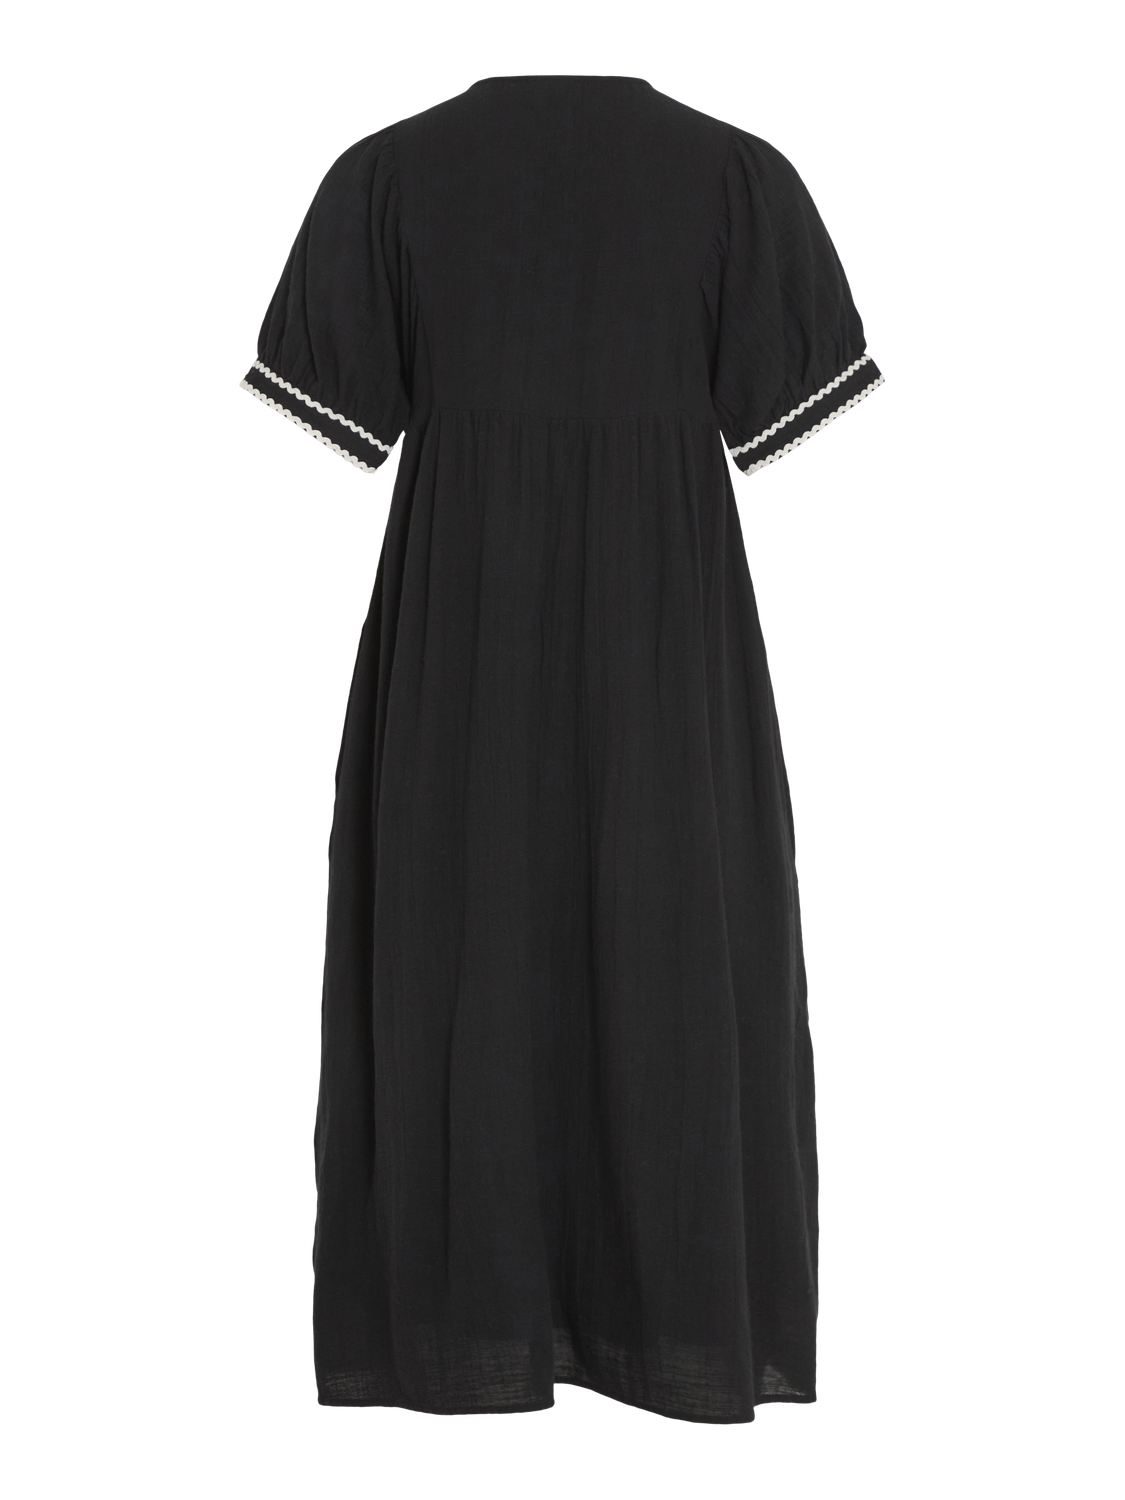 VIMANDA Dress - Black Beauty